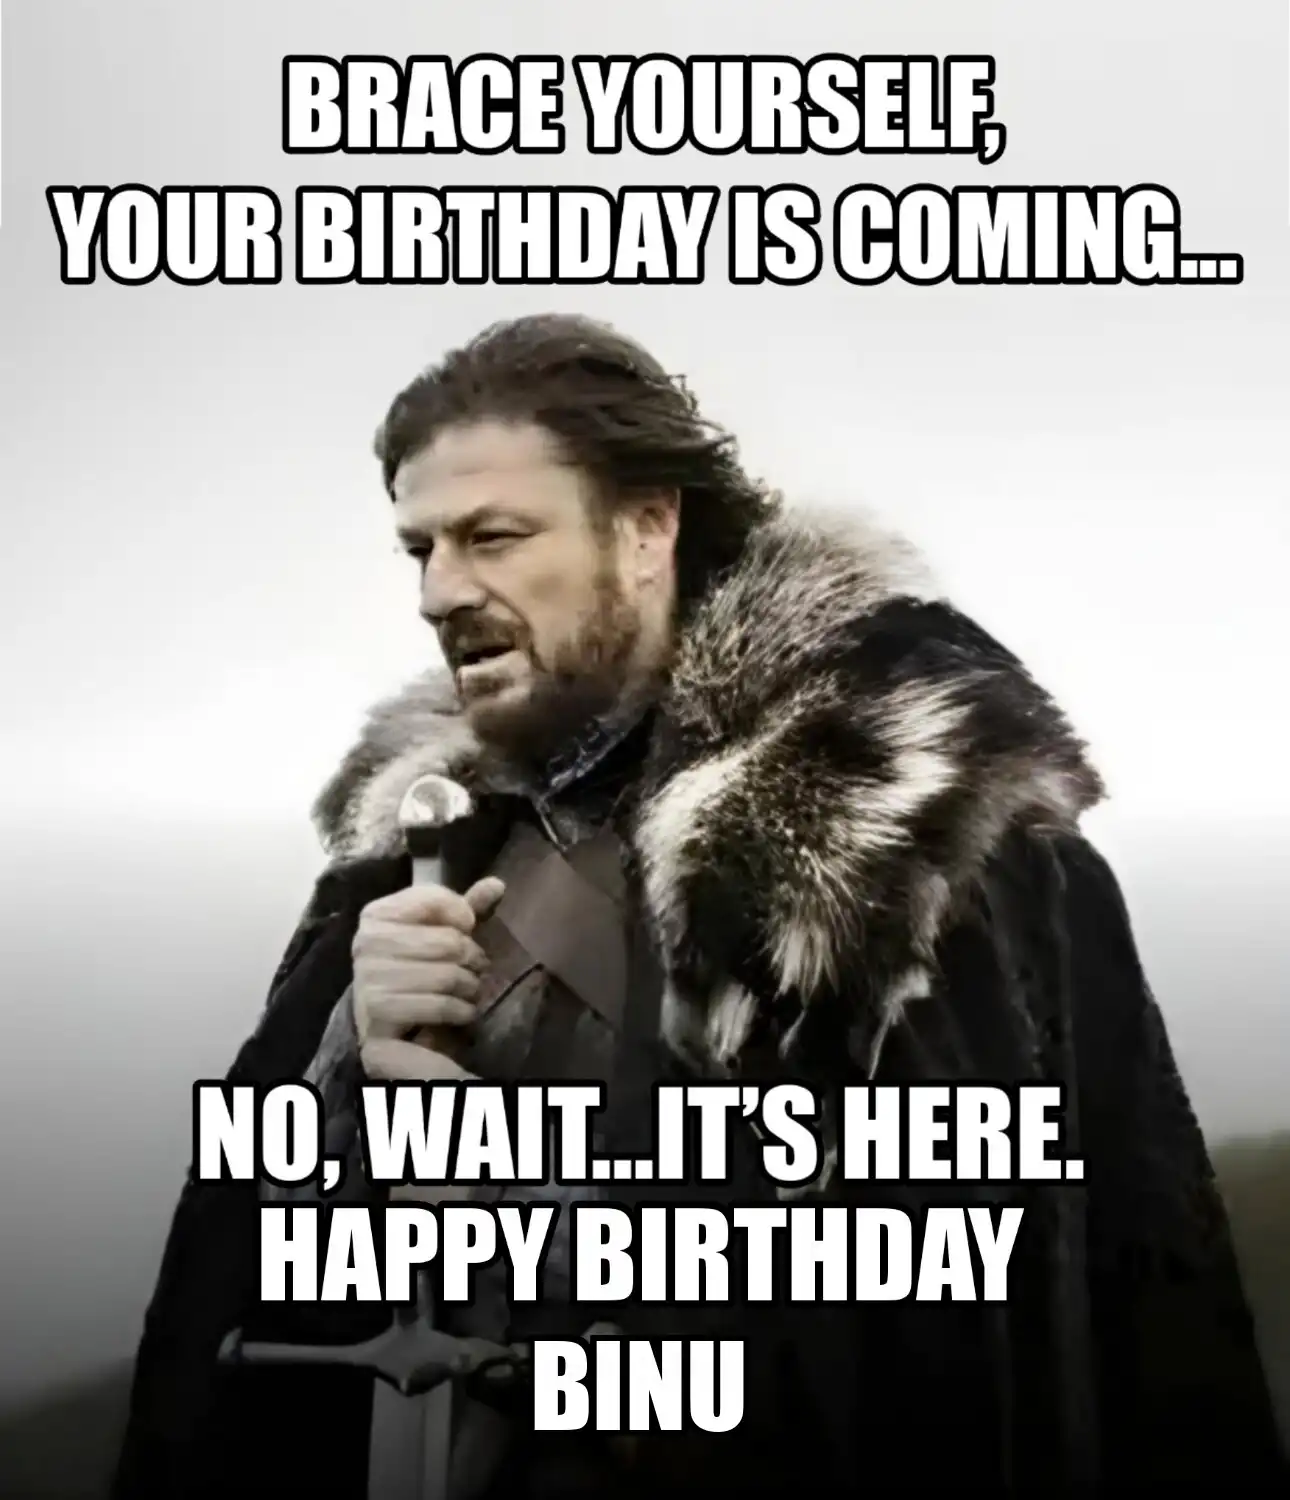 Happy Birthday Binu Brace Yourself Your Birthday Is Coming Meme